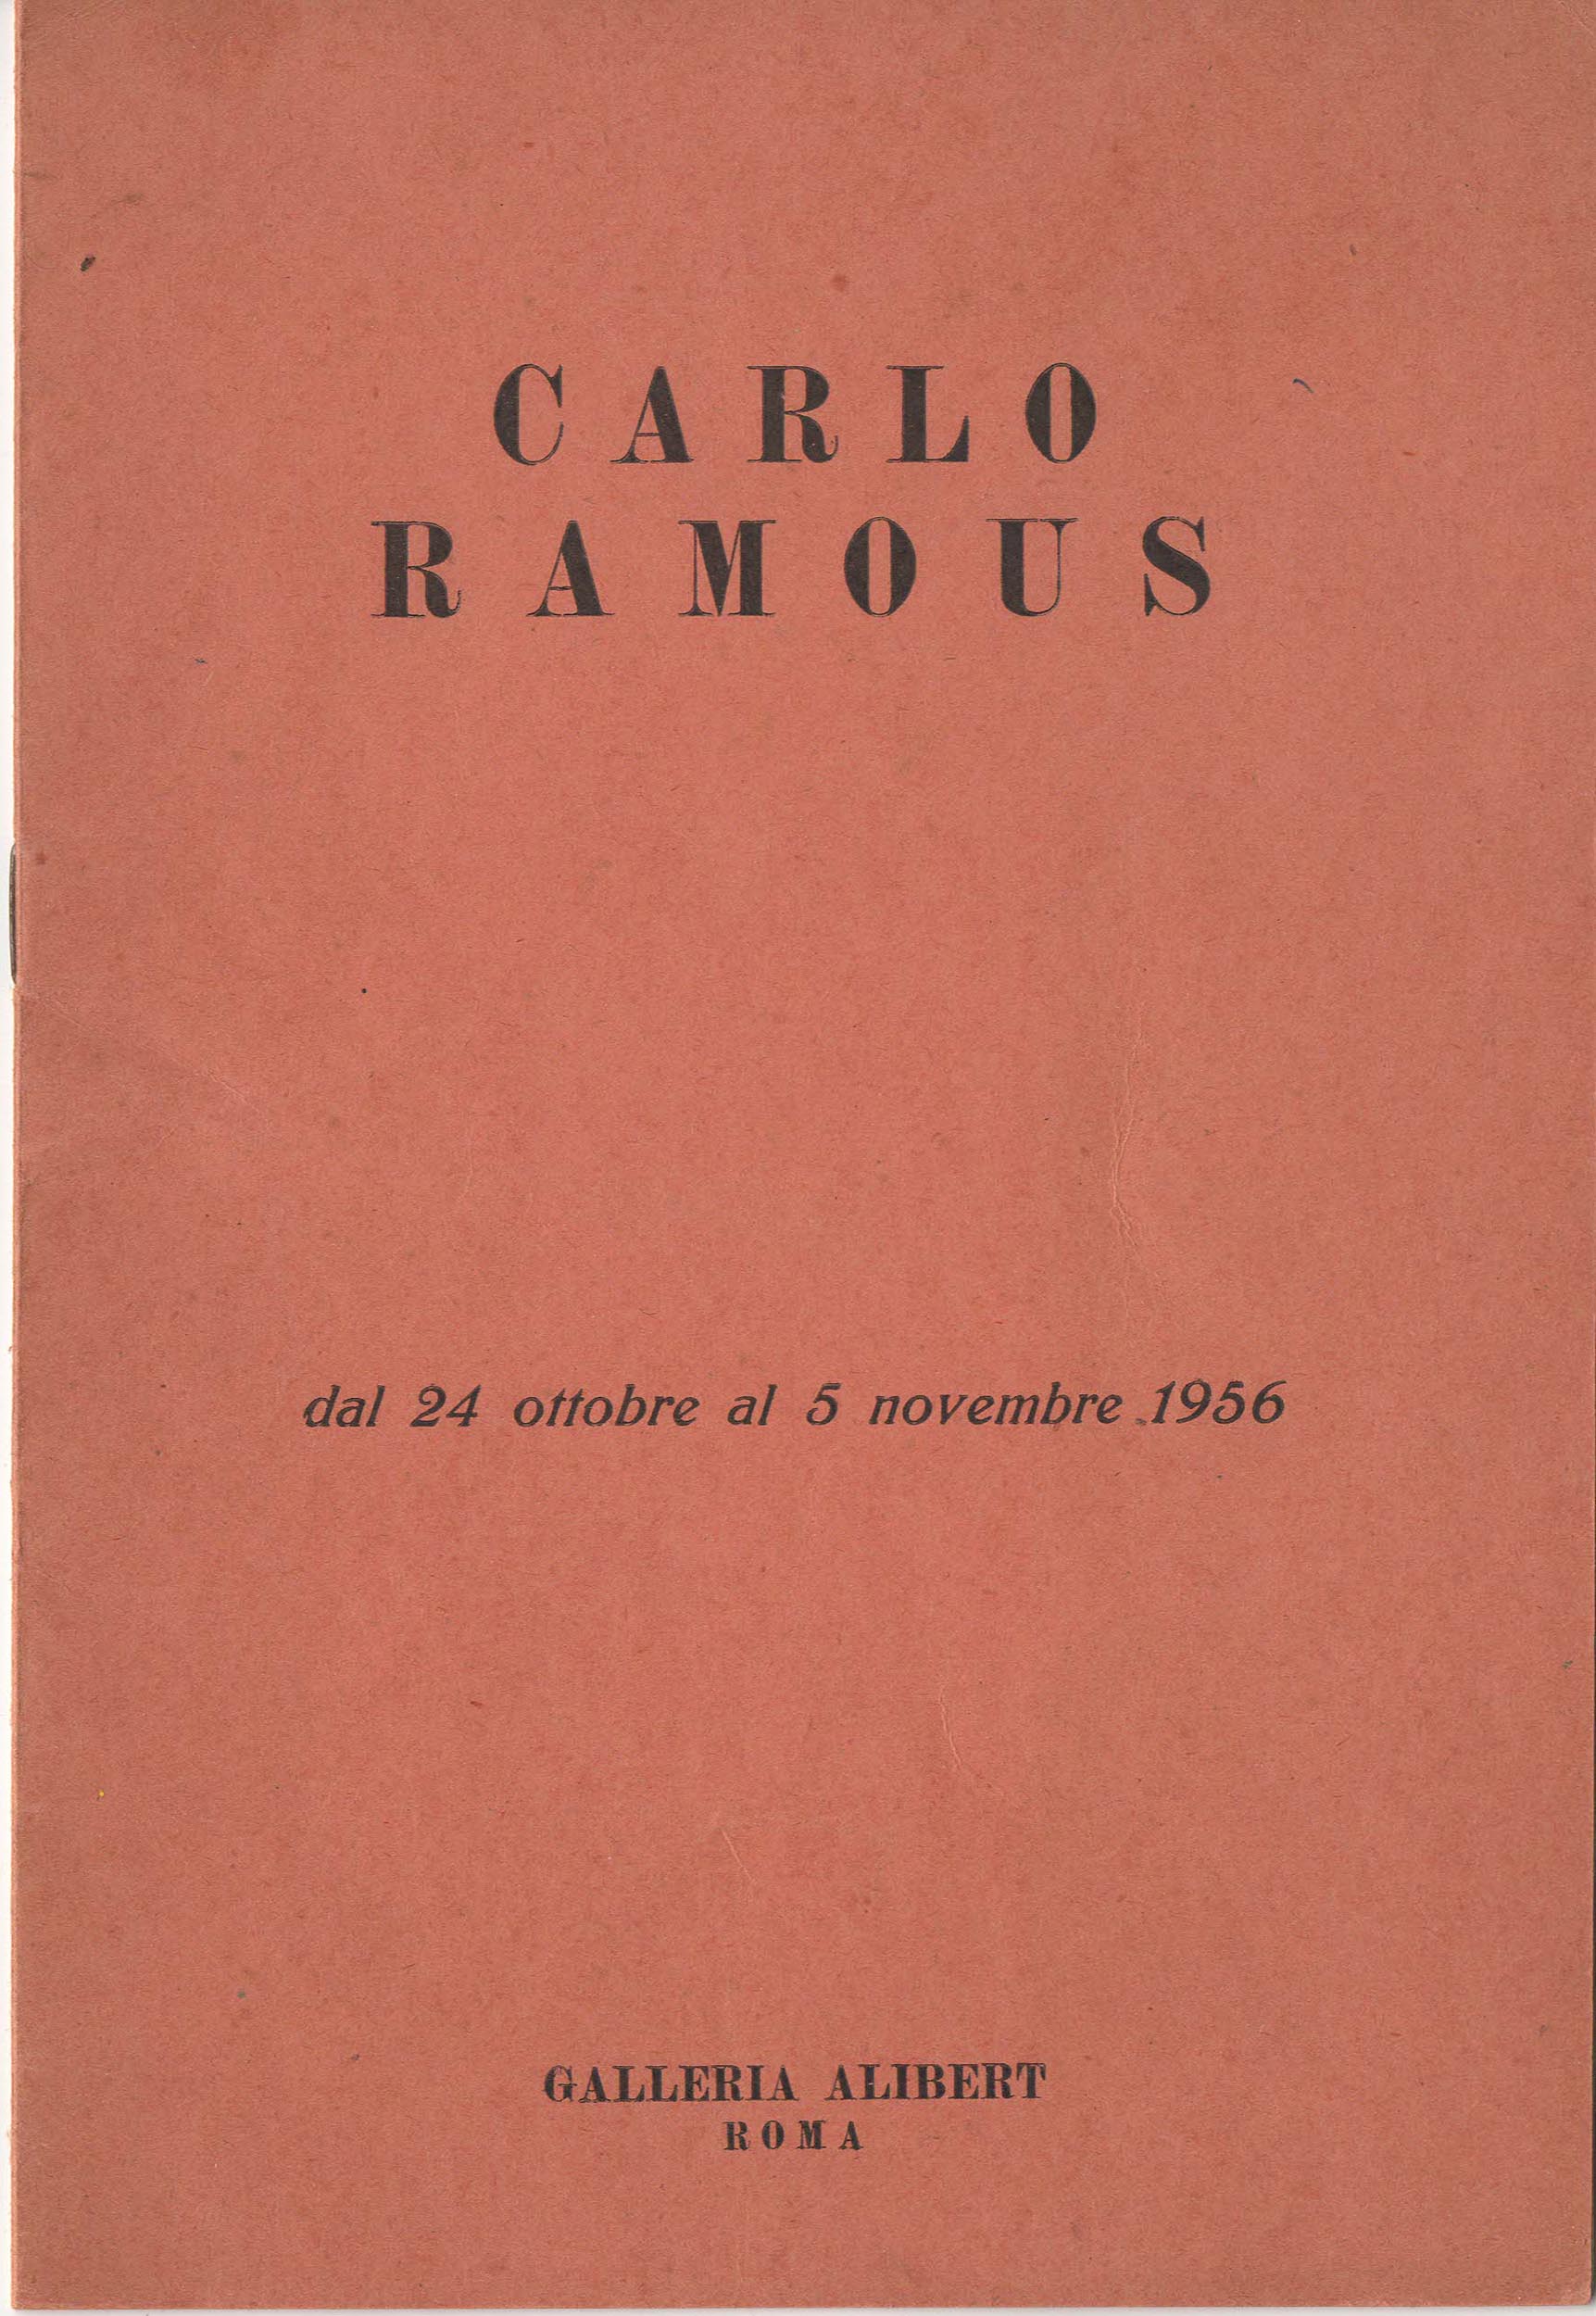 Carlo Ramous – Galleria Alibert, Roma – Catalogo